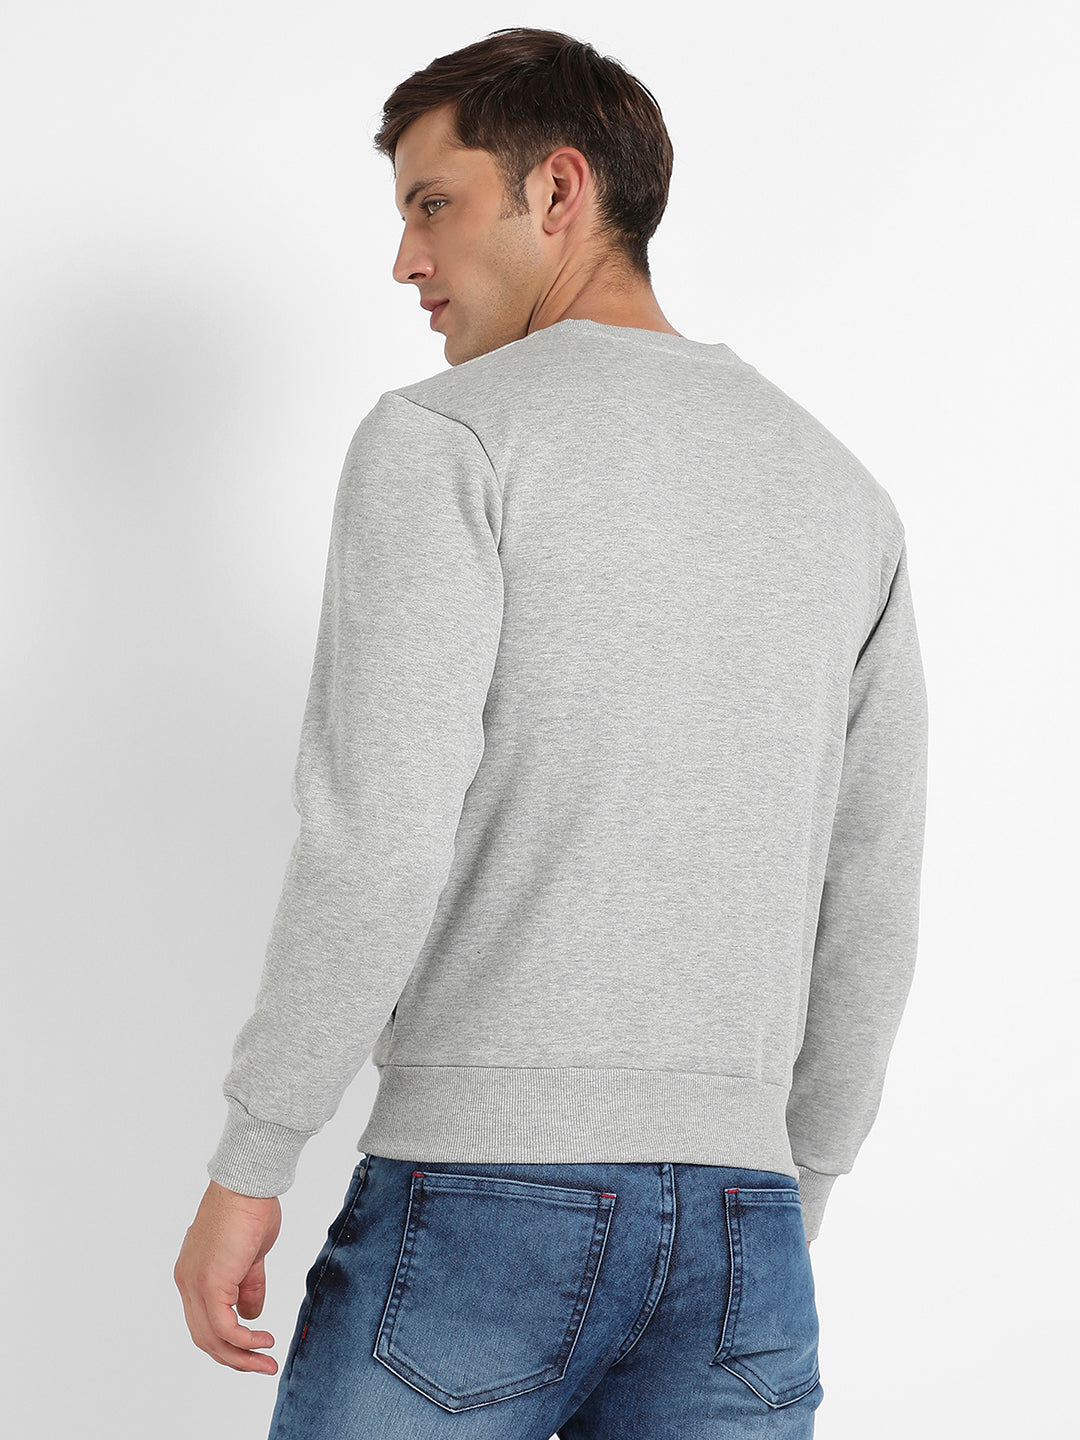 Rad Pullover Sweatshirt